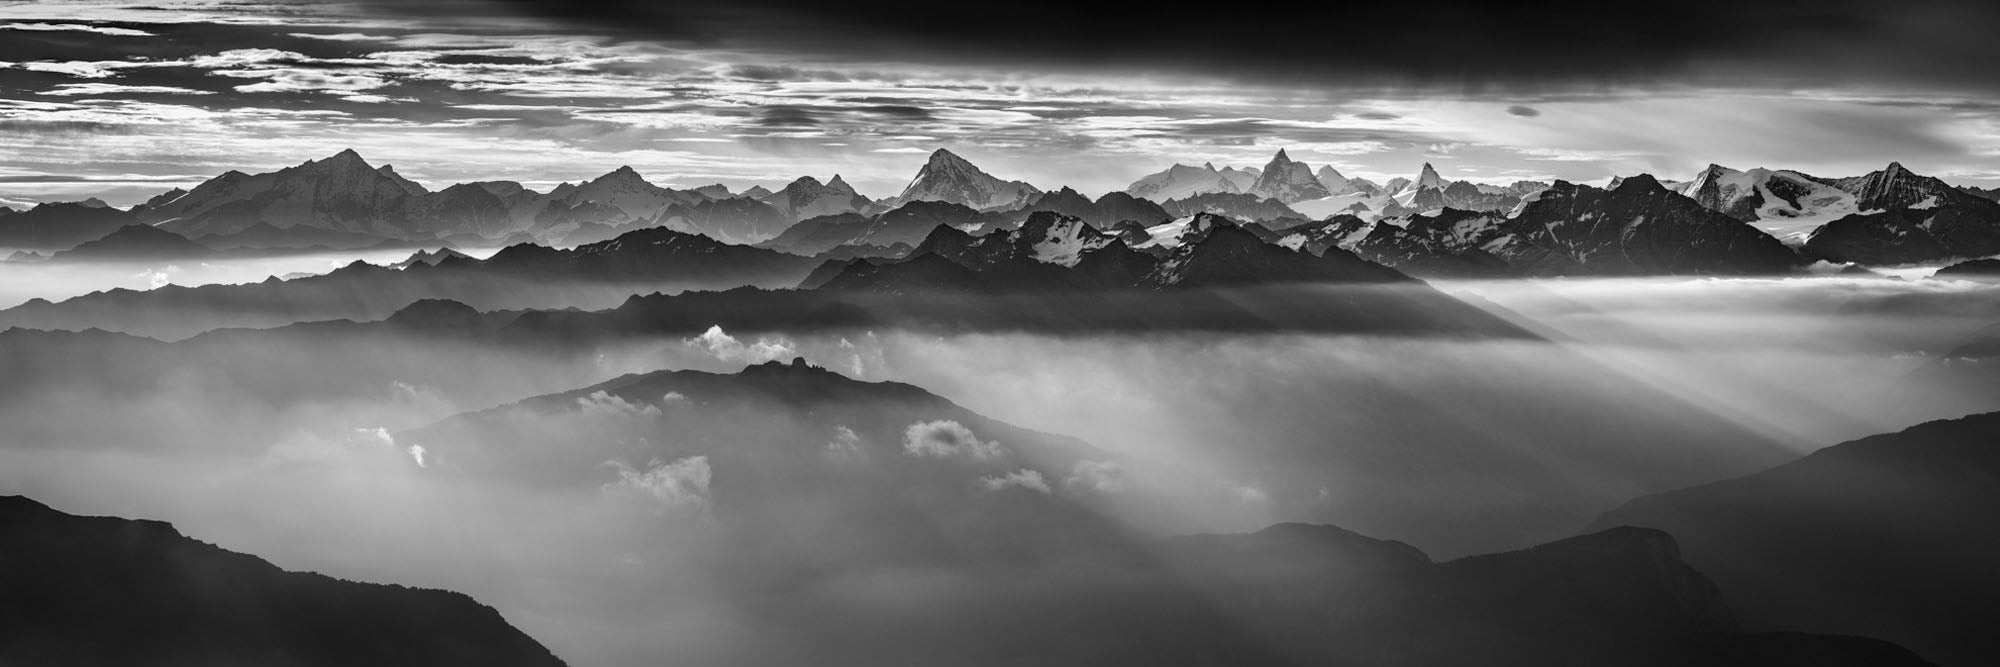 Les alpes Valaisannes, Switzerland.